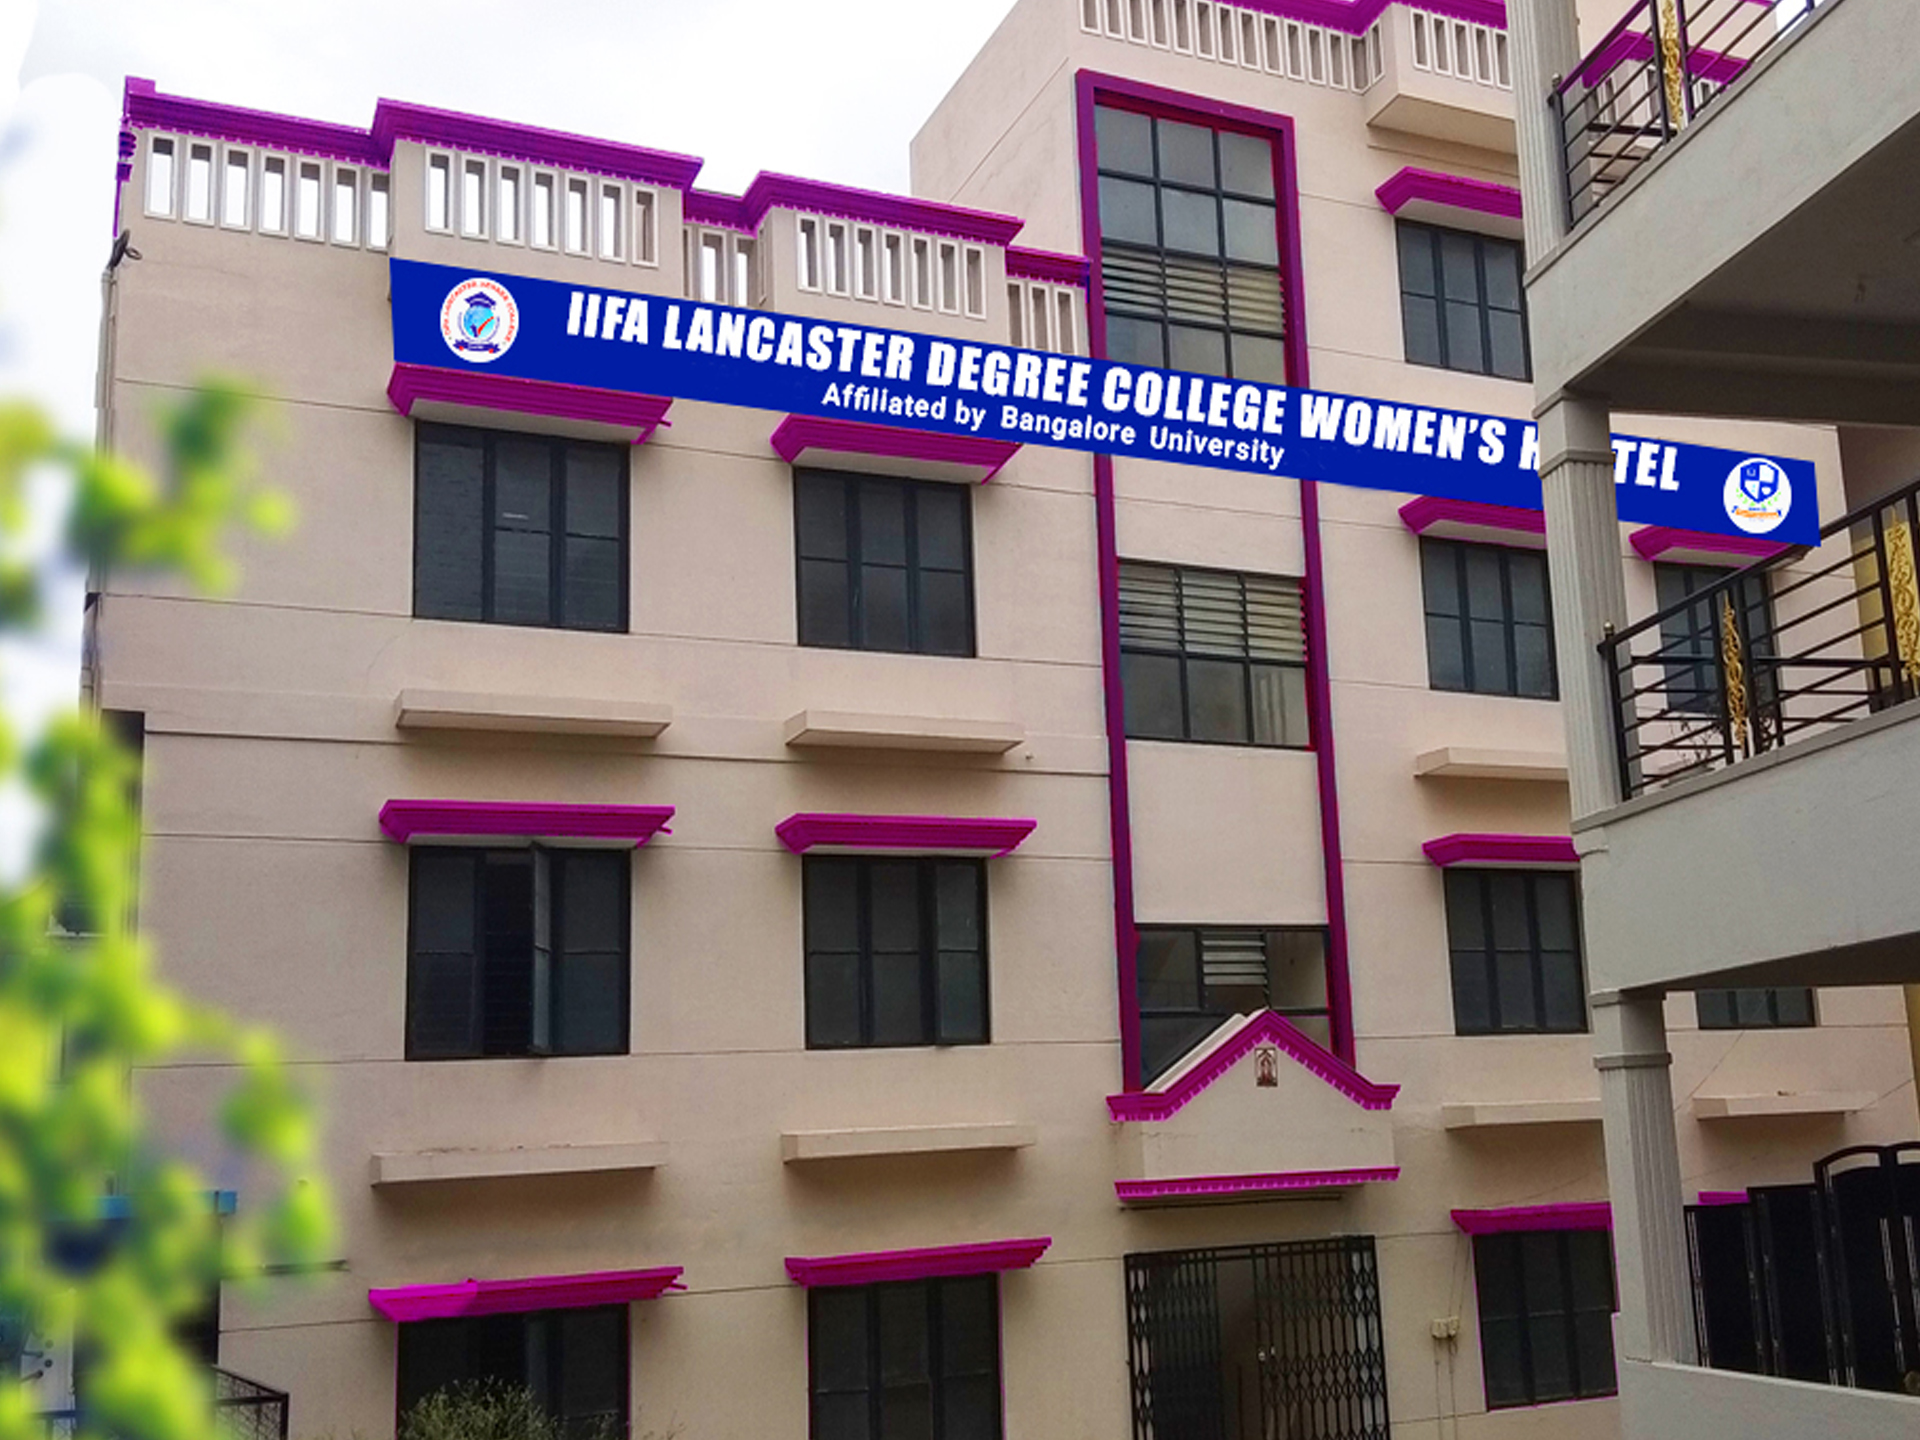 IIFA Lancaster Degree college Women's hostel